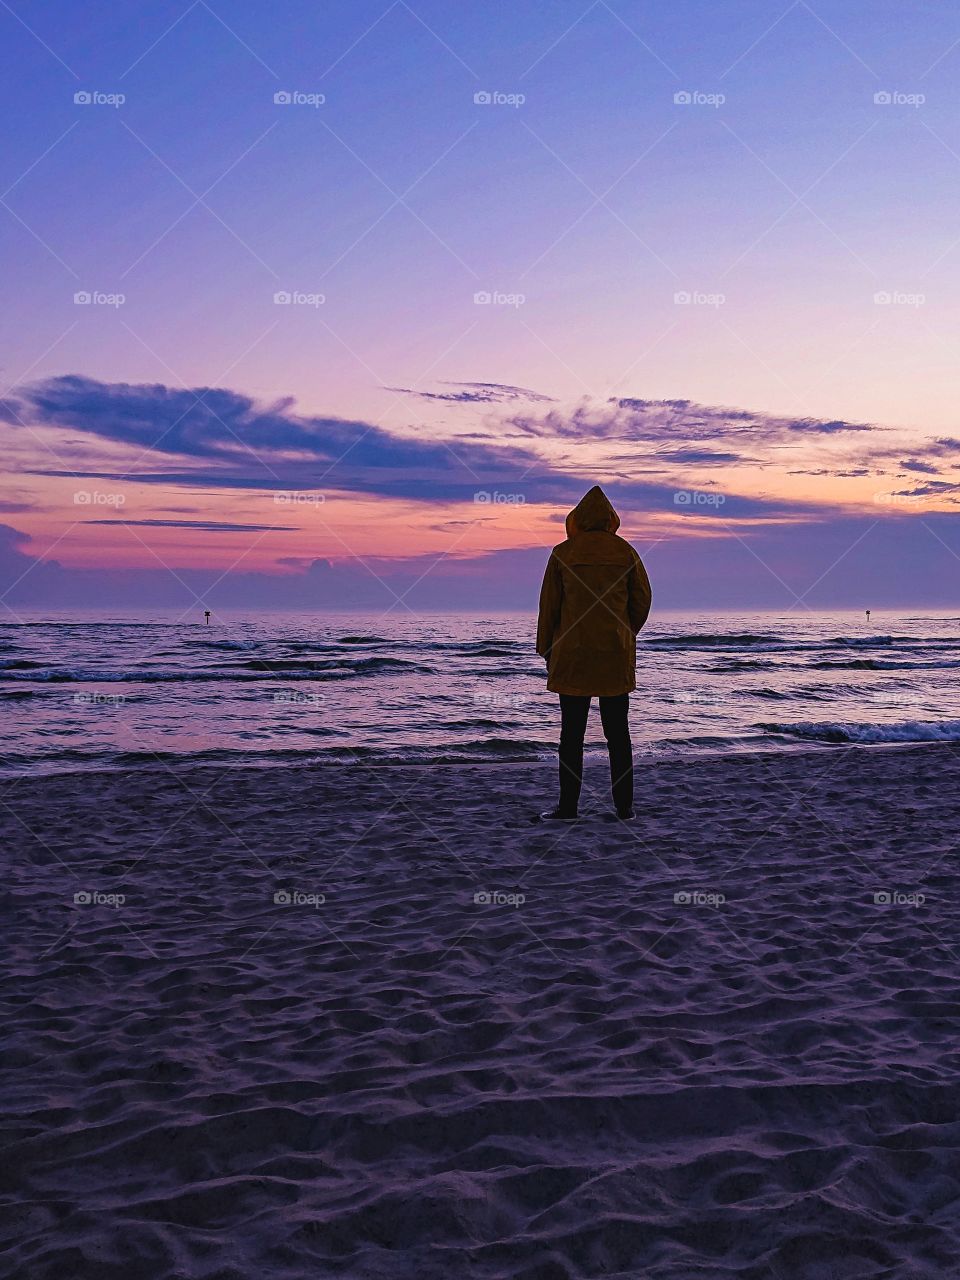 Seaman. Sunrise on the beach